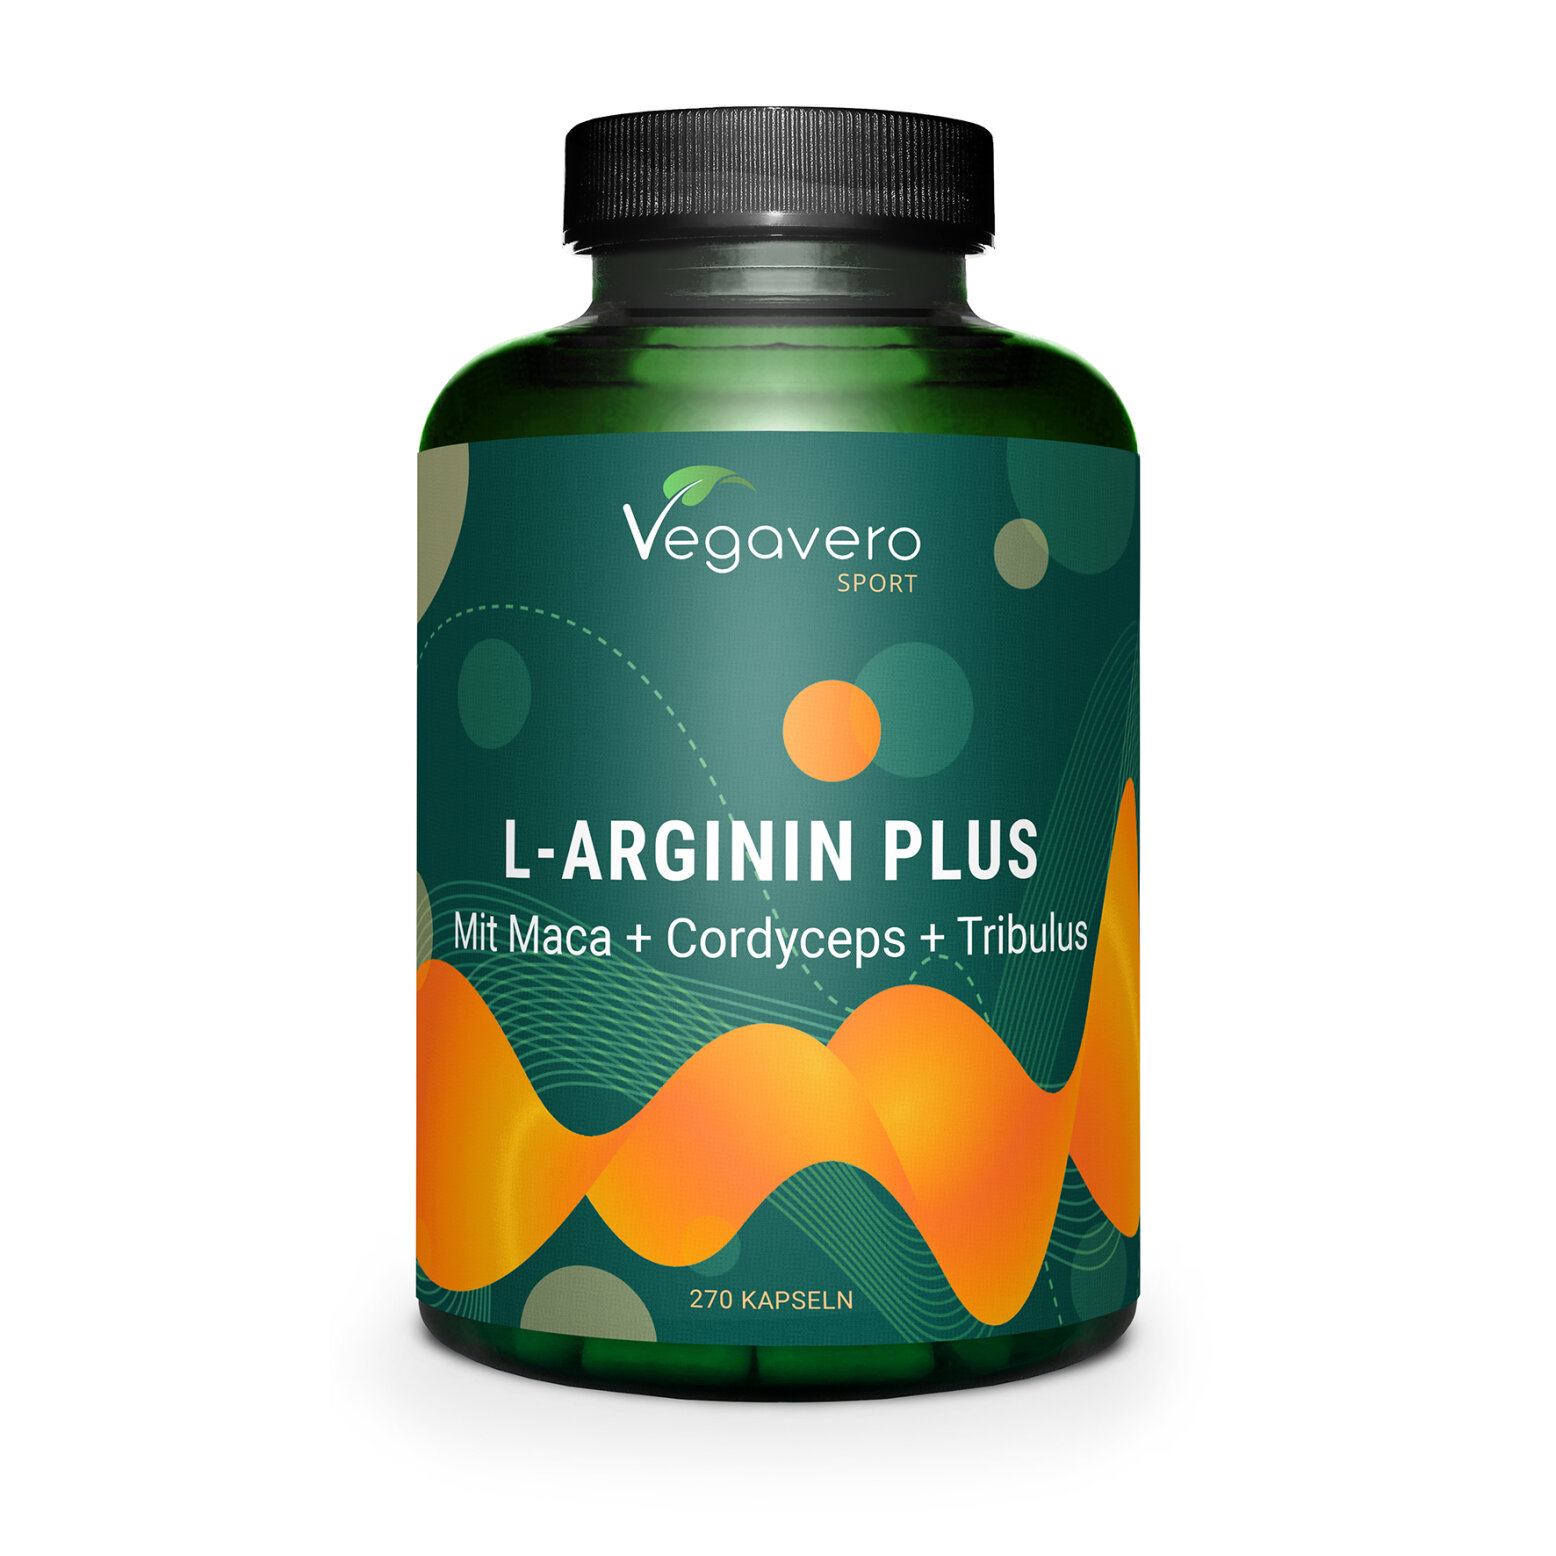 Vegavero L-Arginin Plus | 180 Kapseln | mit Maca, Cordyceps und Tribulus | vegan